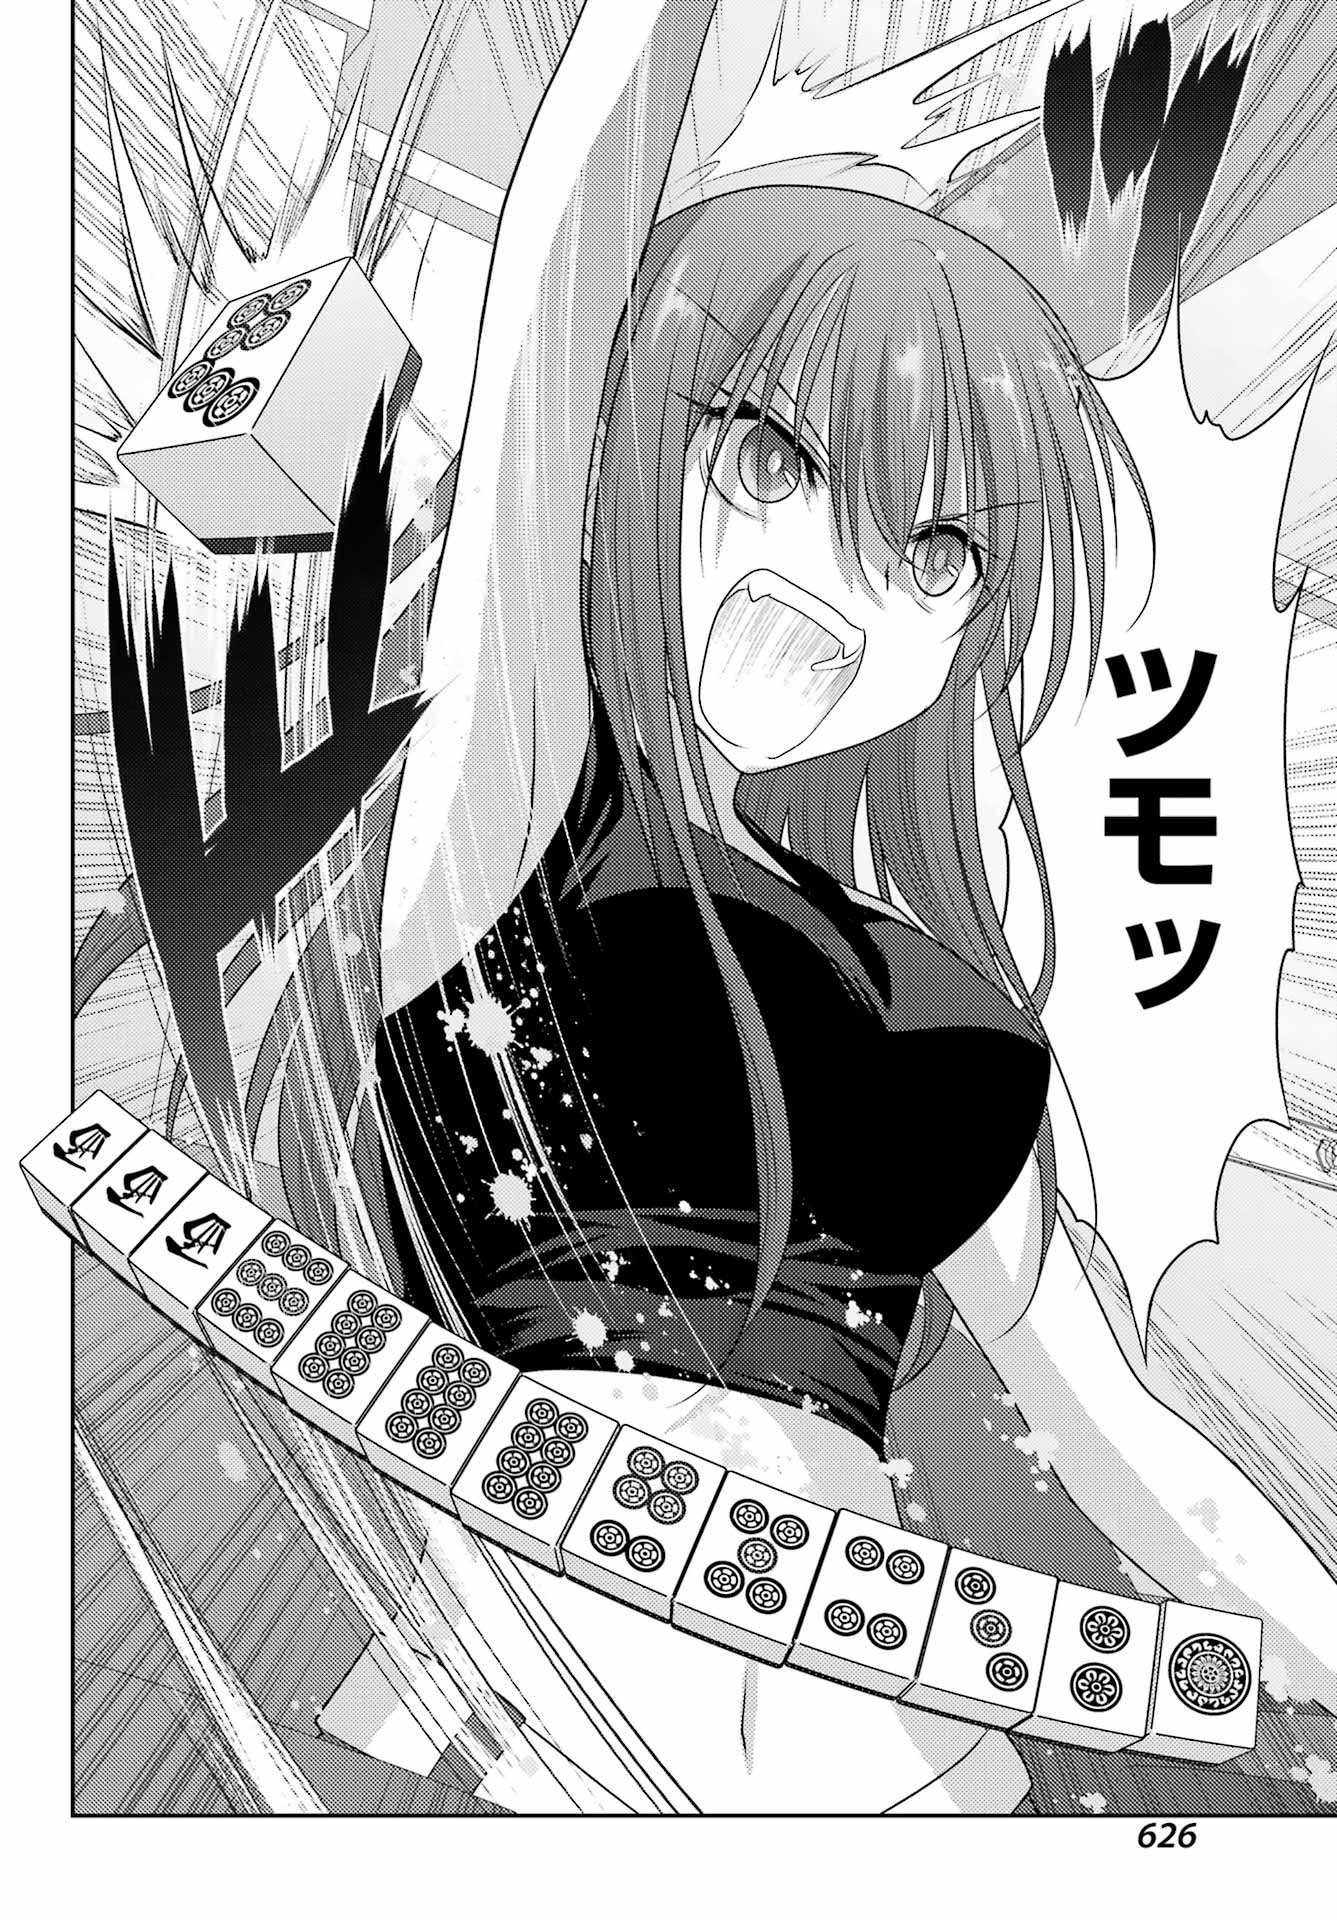 Shinohayu - The Dawn of Age Manga - Chapter 103-2 - Page 16